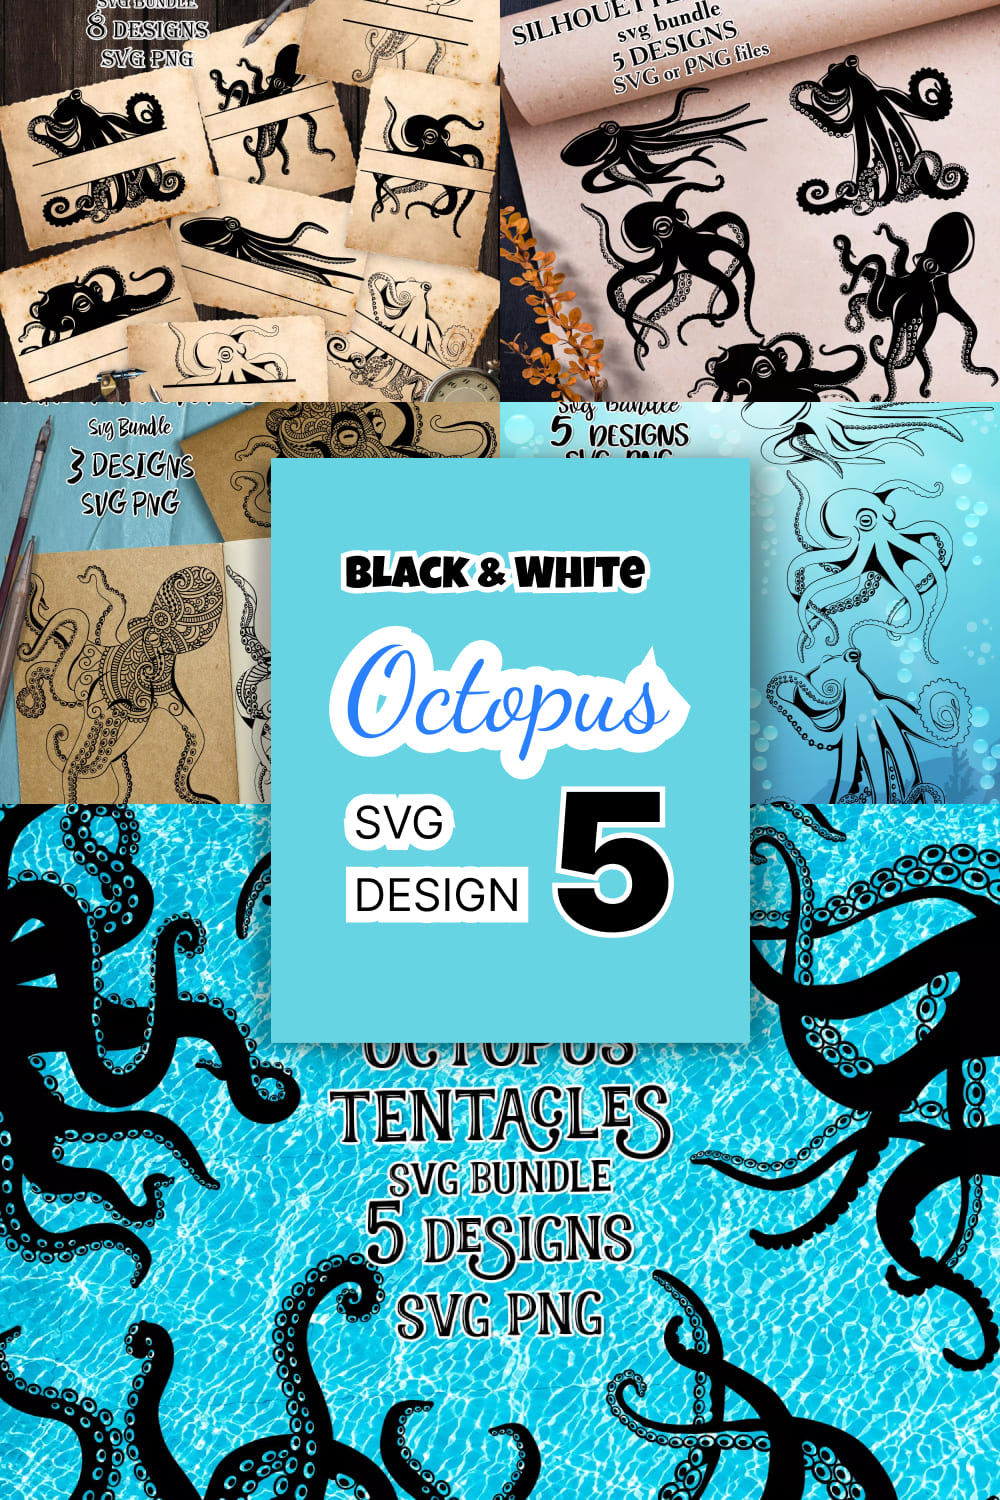 Black & White Octopus SVG Bundle - pinterest image preview.